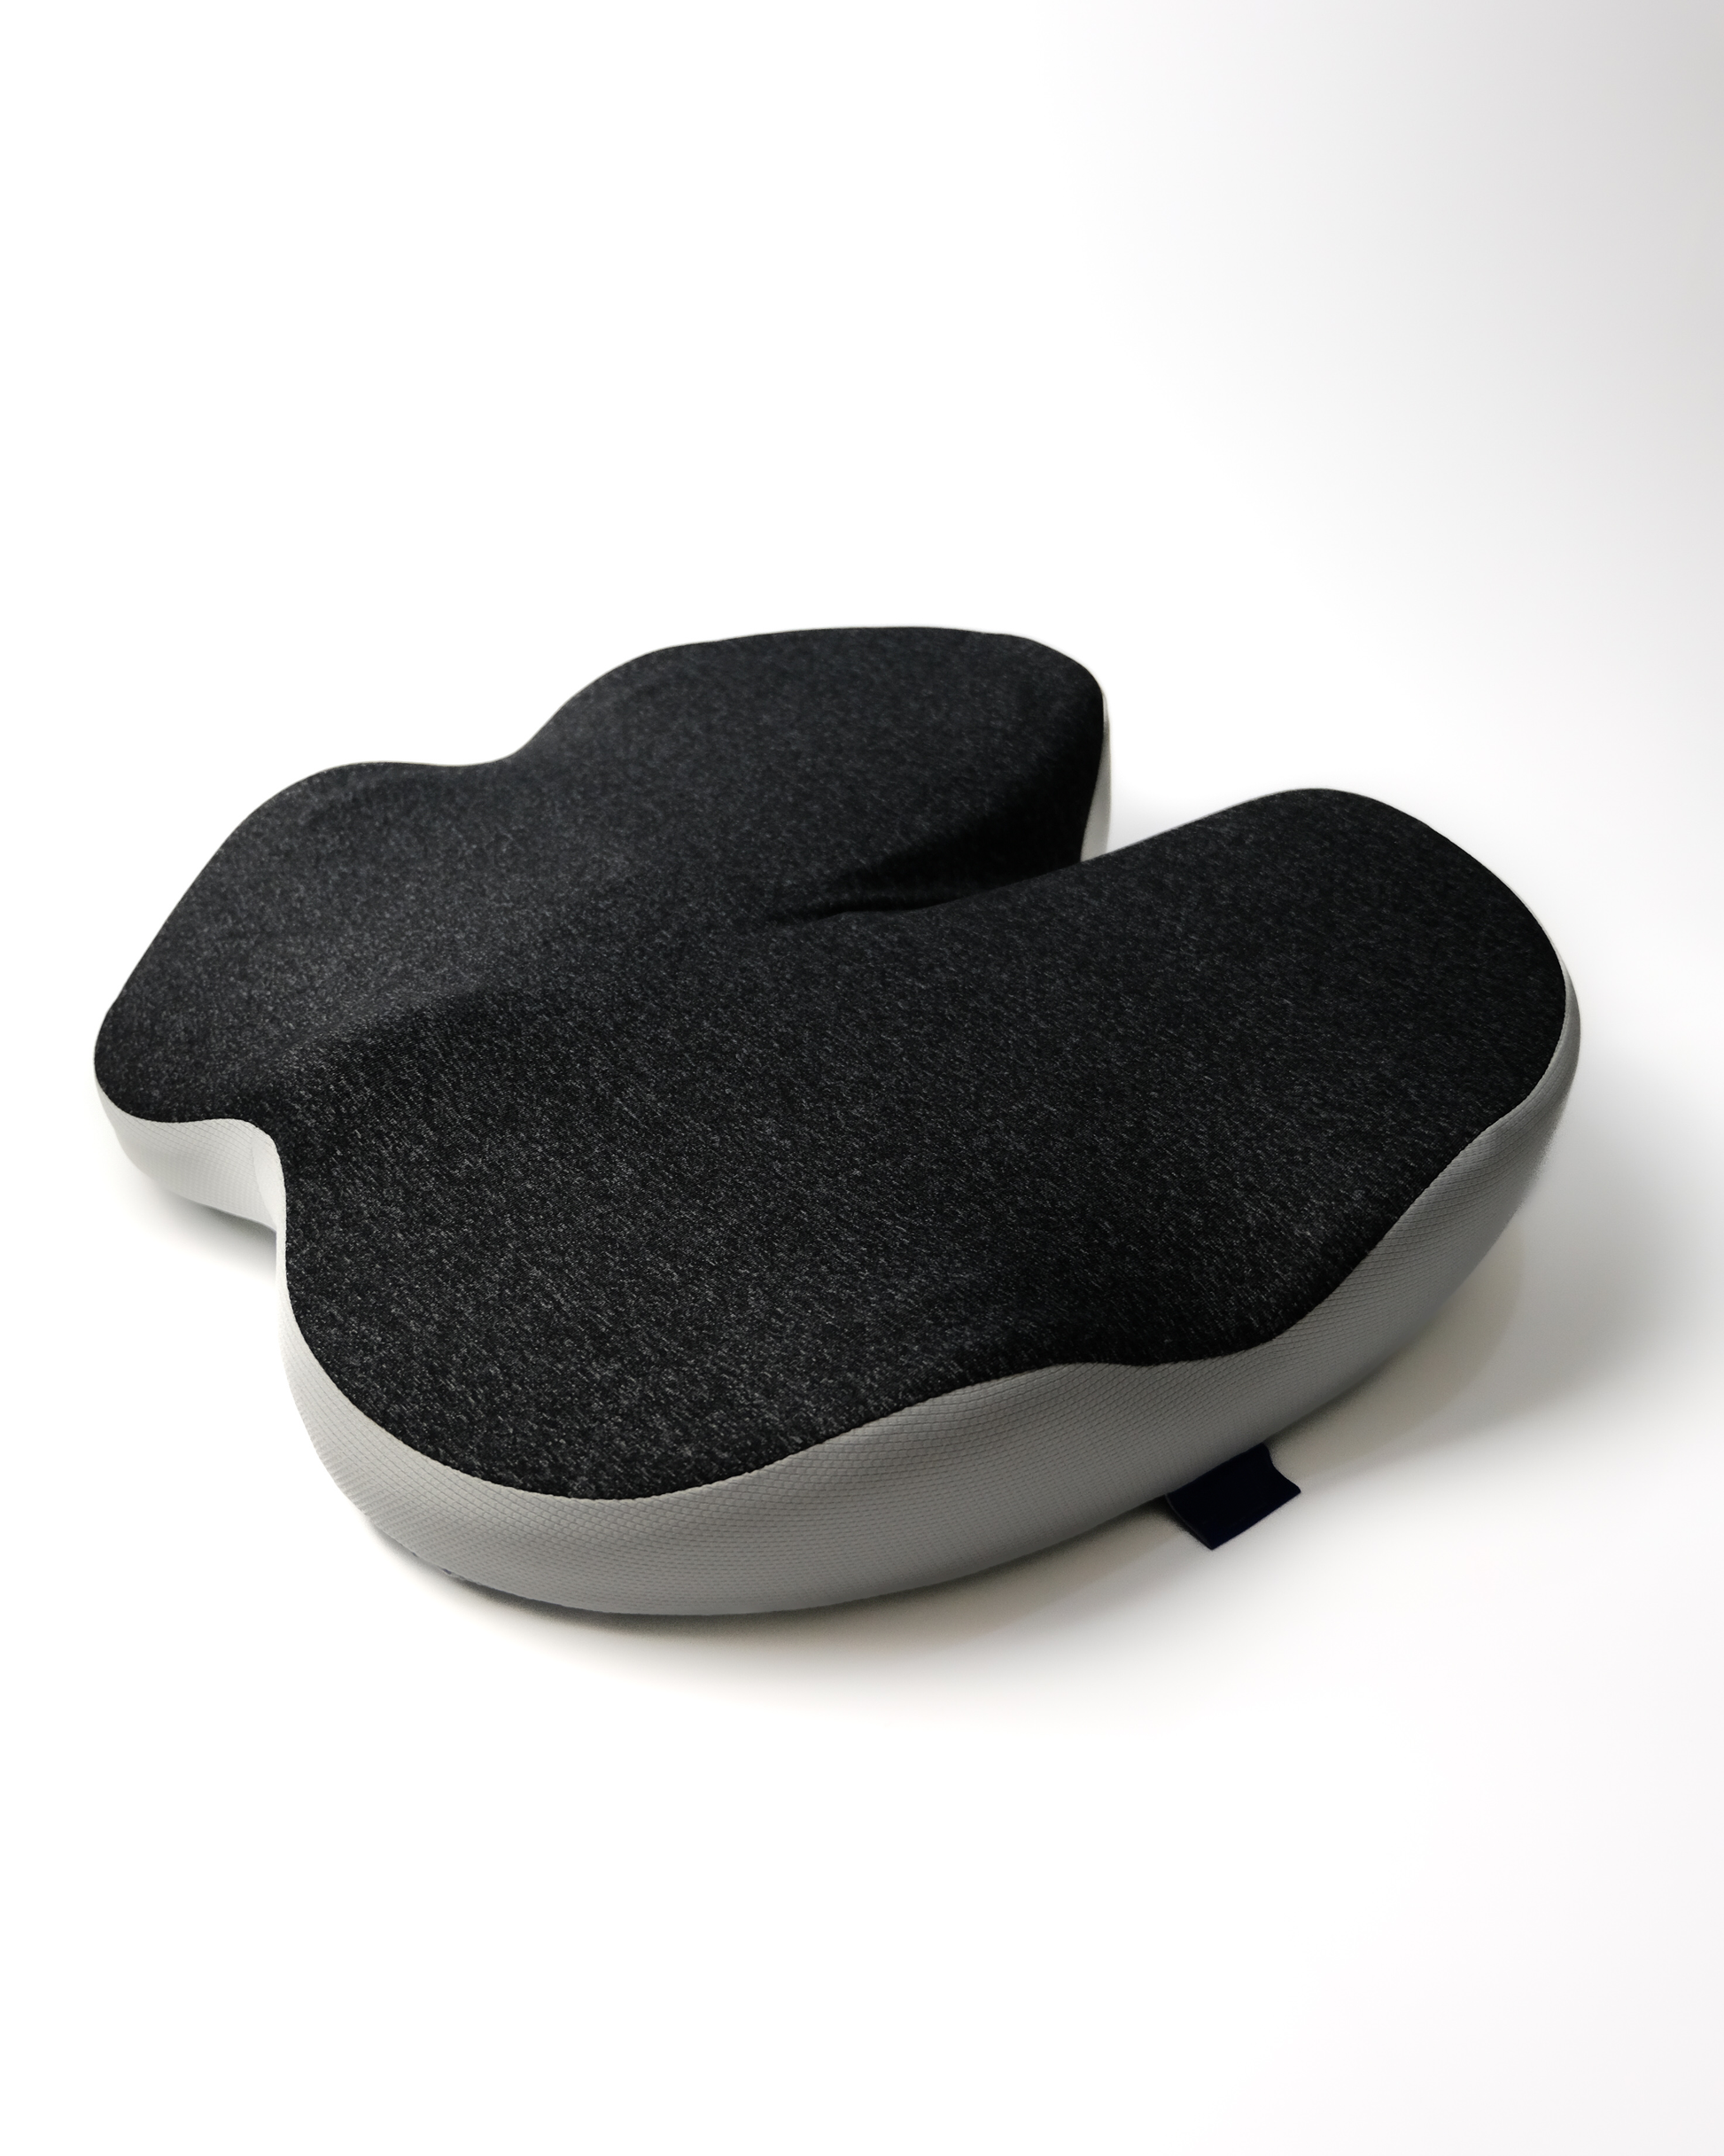 Komfort Cushion  The Lumbar Back Support Super Versatile